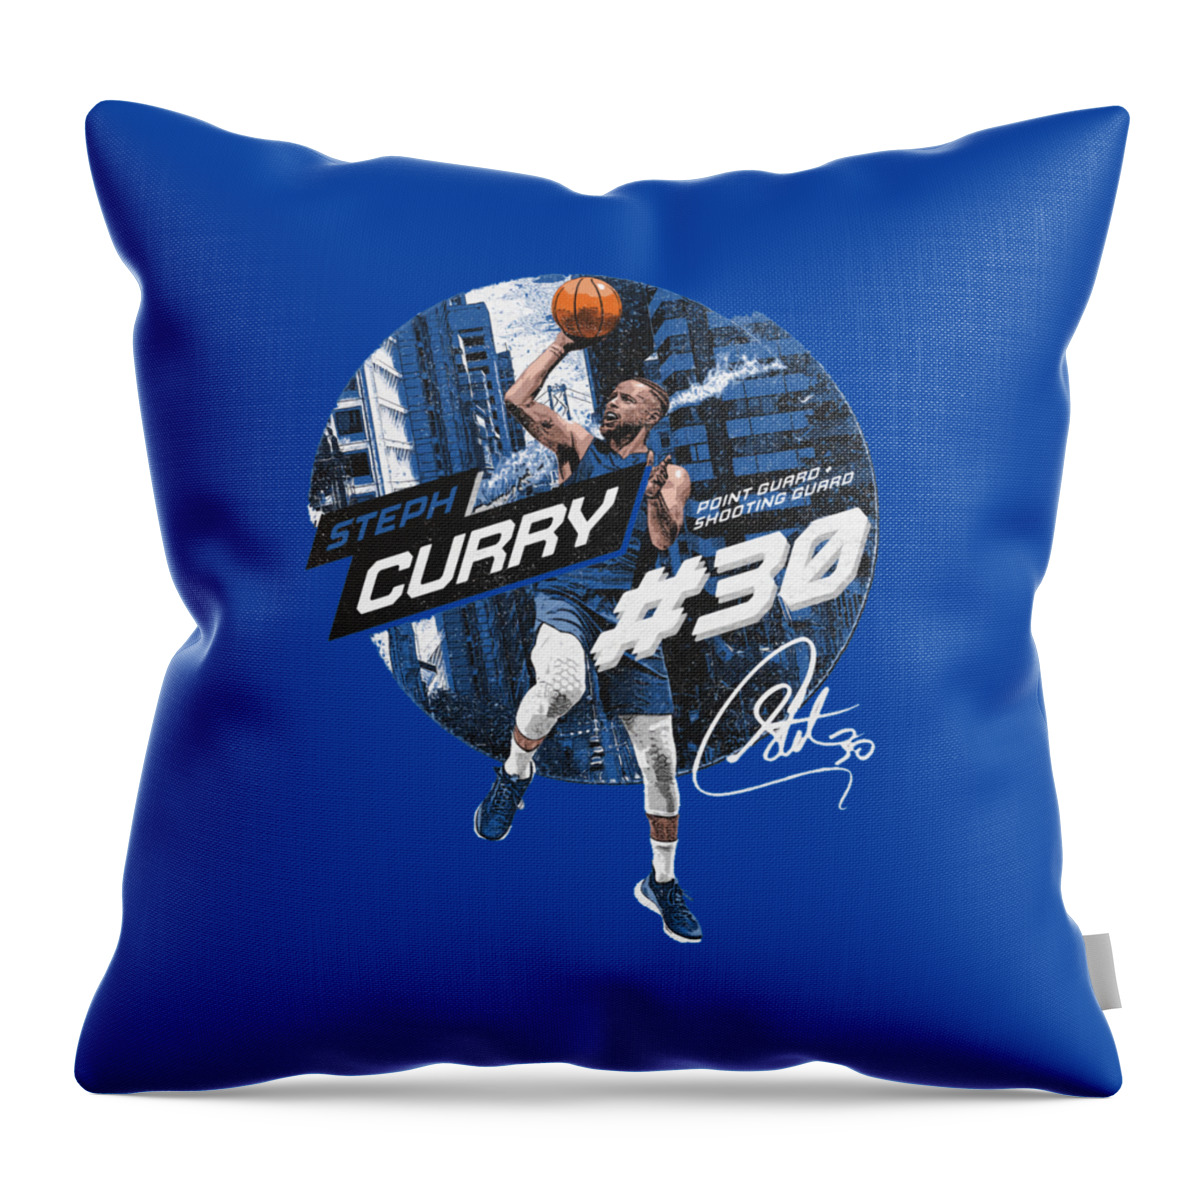 Steph Curry City Emblem Throw Pillow featuring the digital art Steph Curry City Emblem by Kelvin Kent